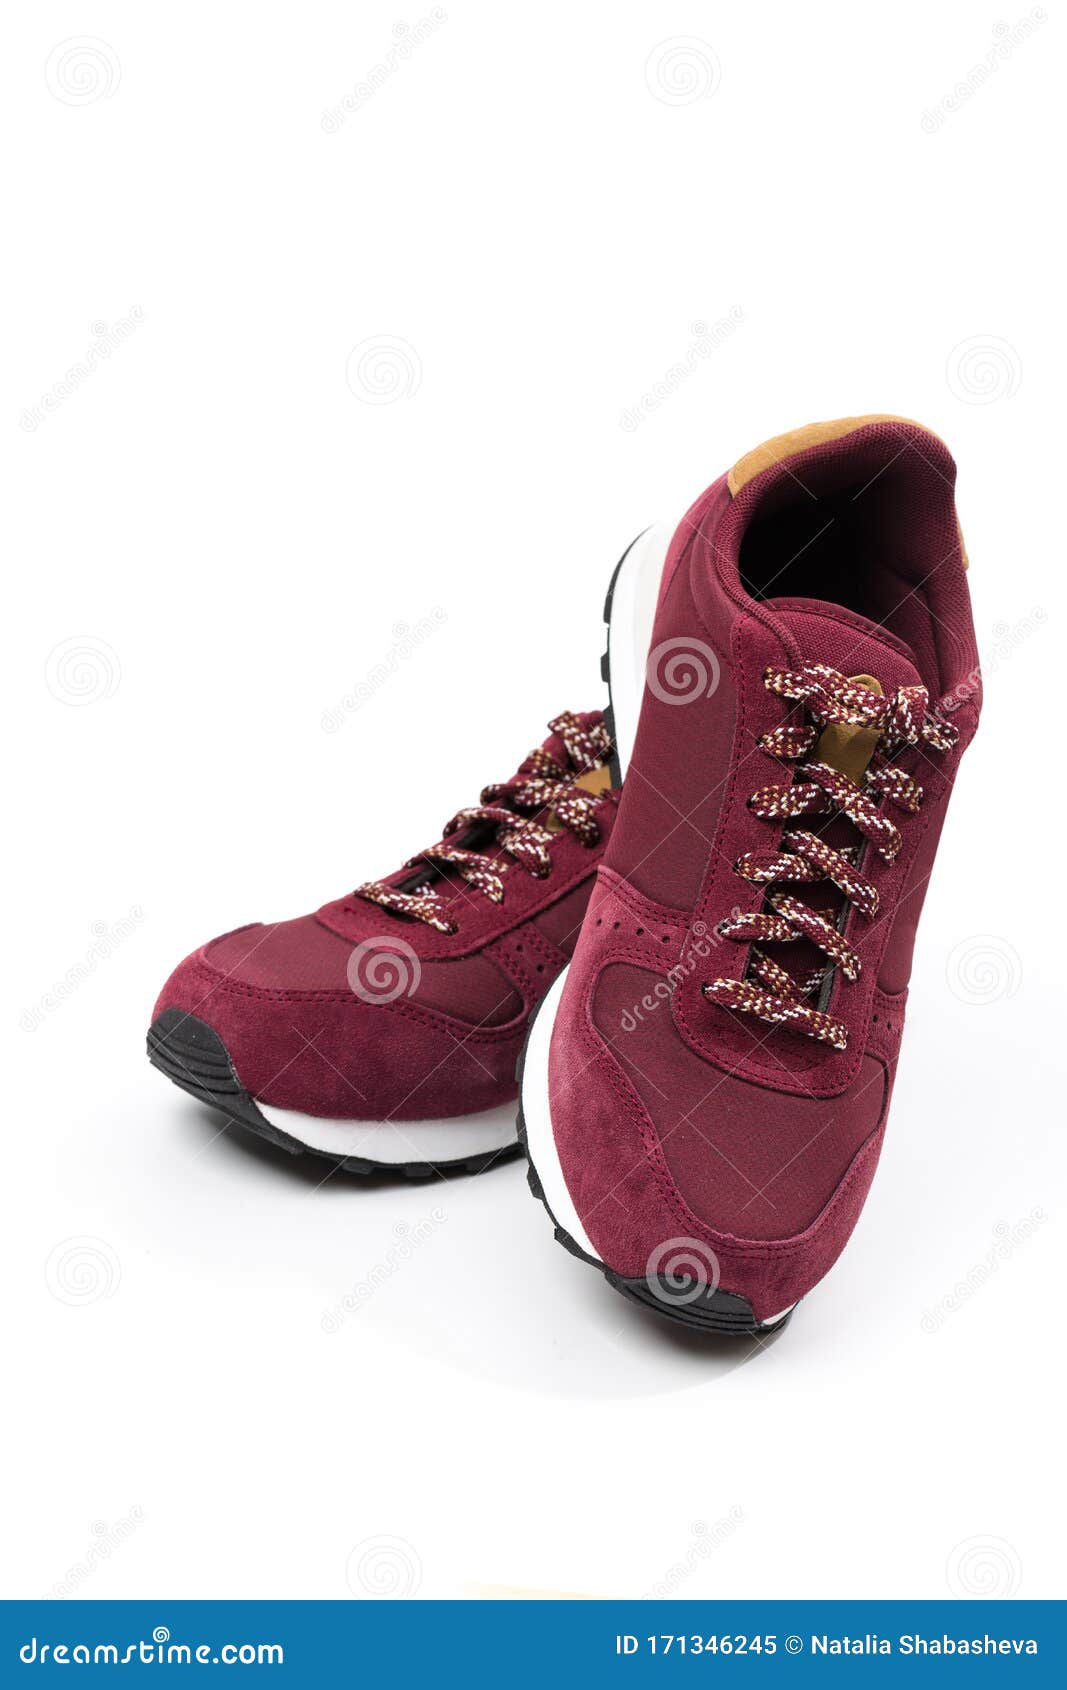 burgundy athletic shoes